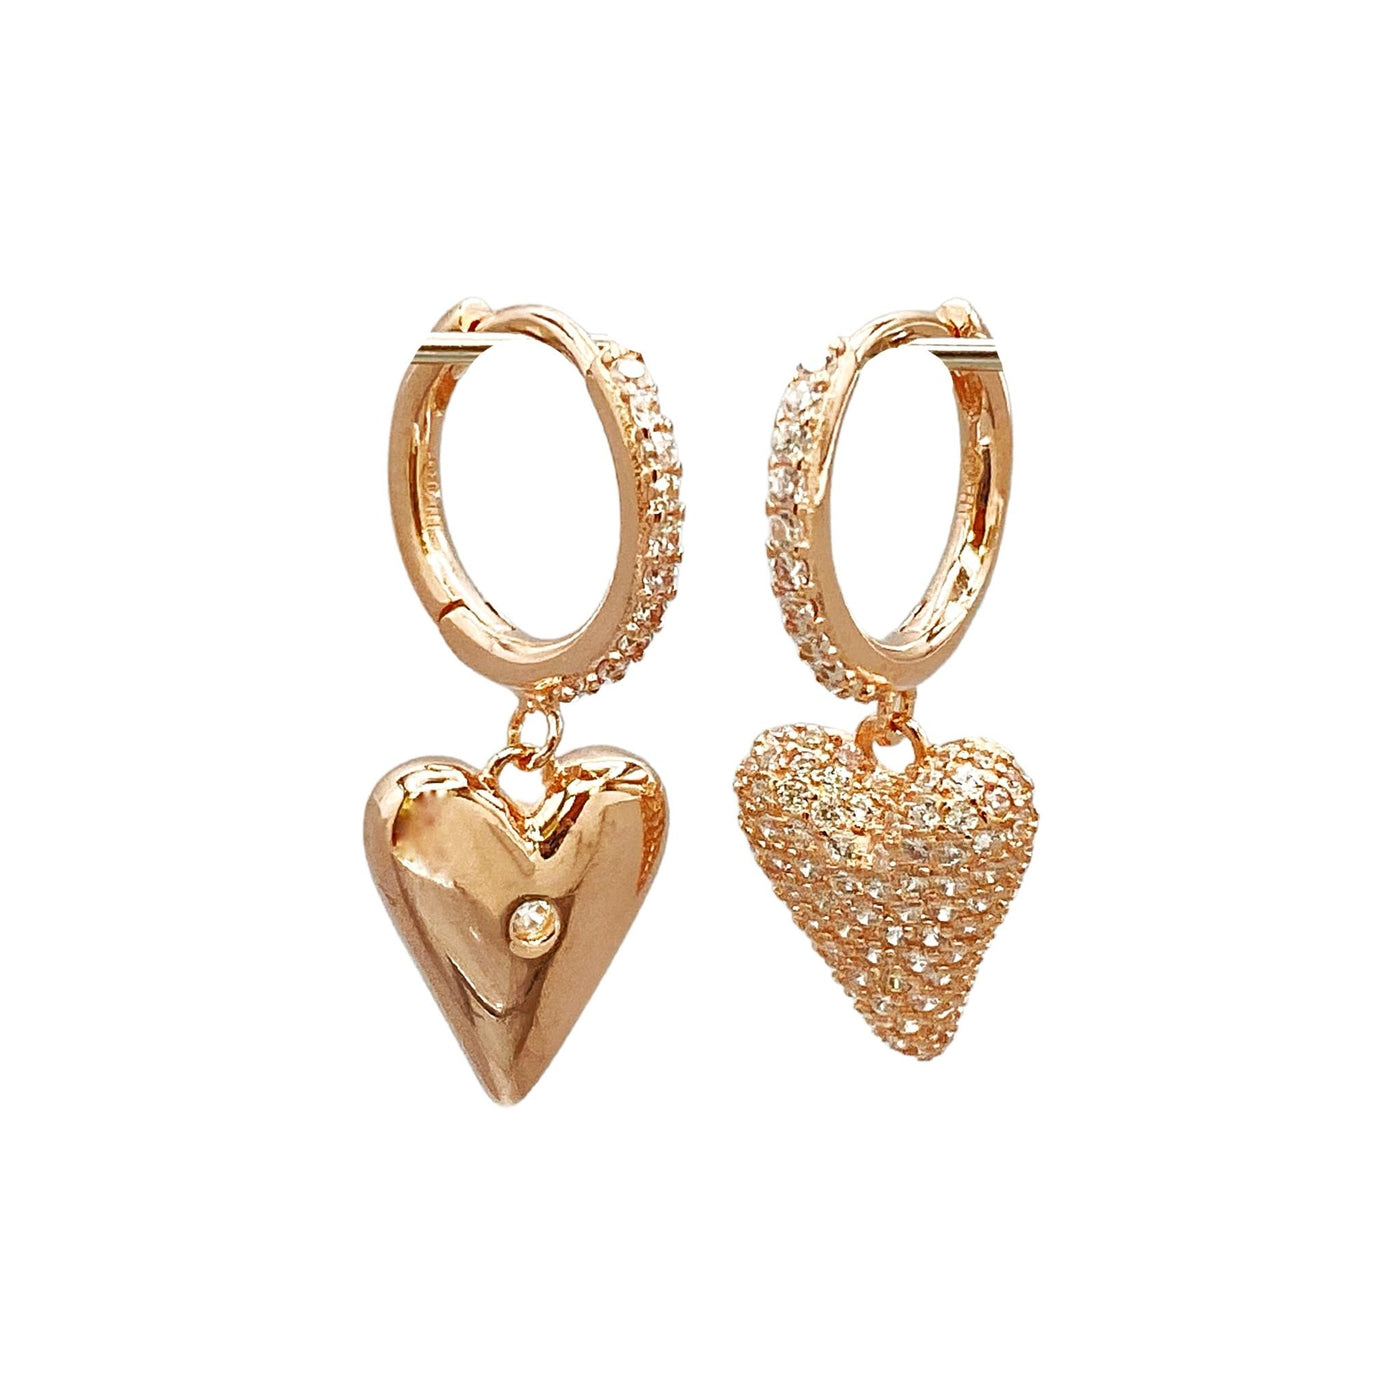 Silver hoop earrings with heart charm